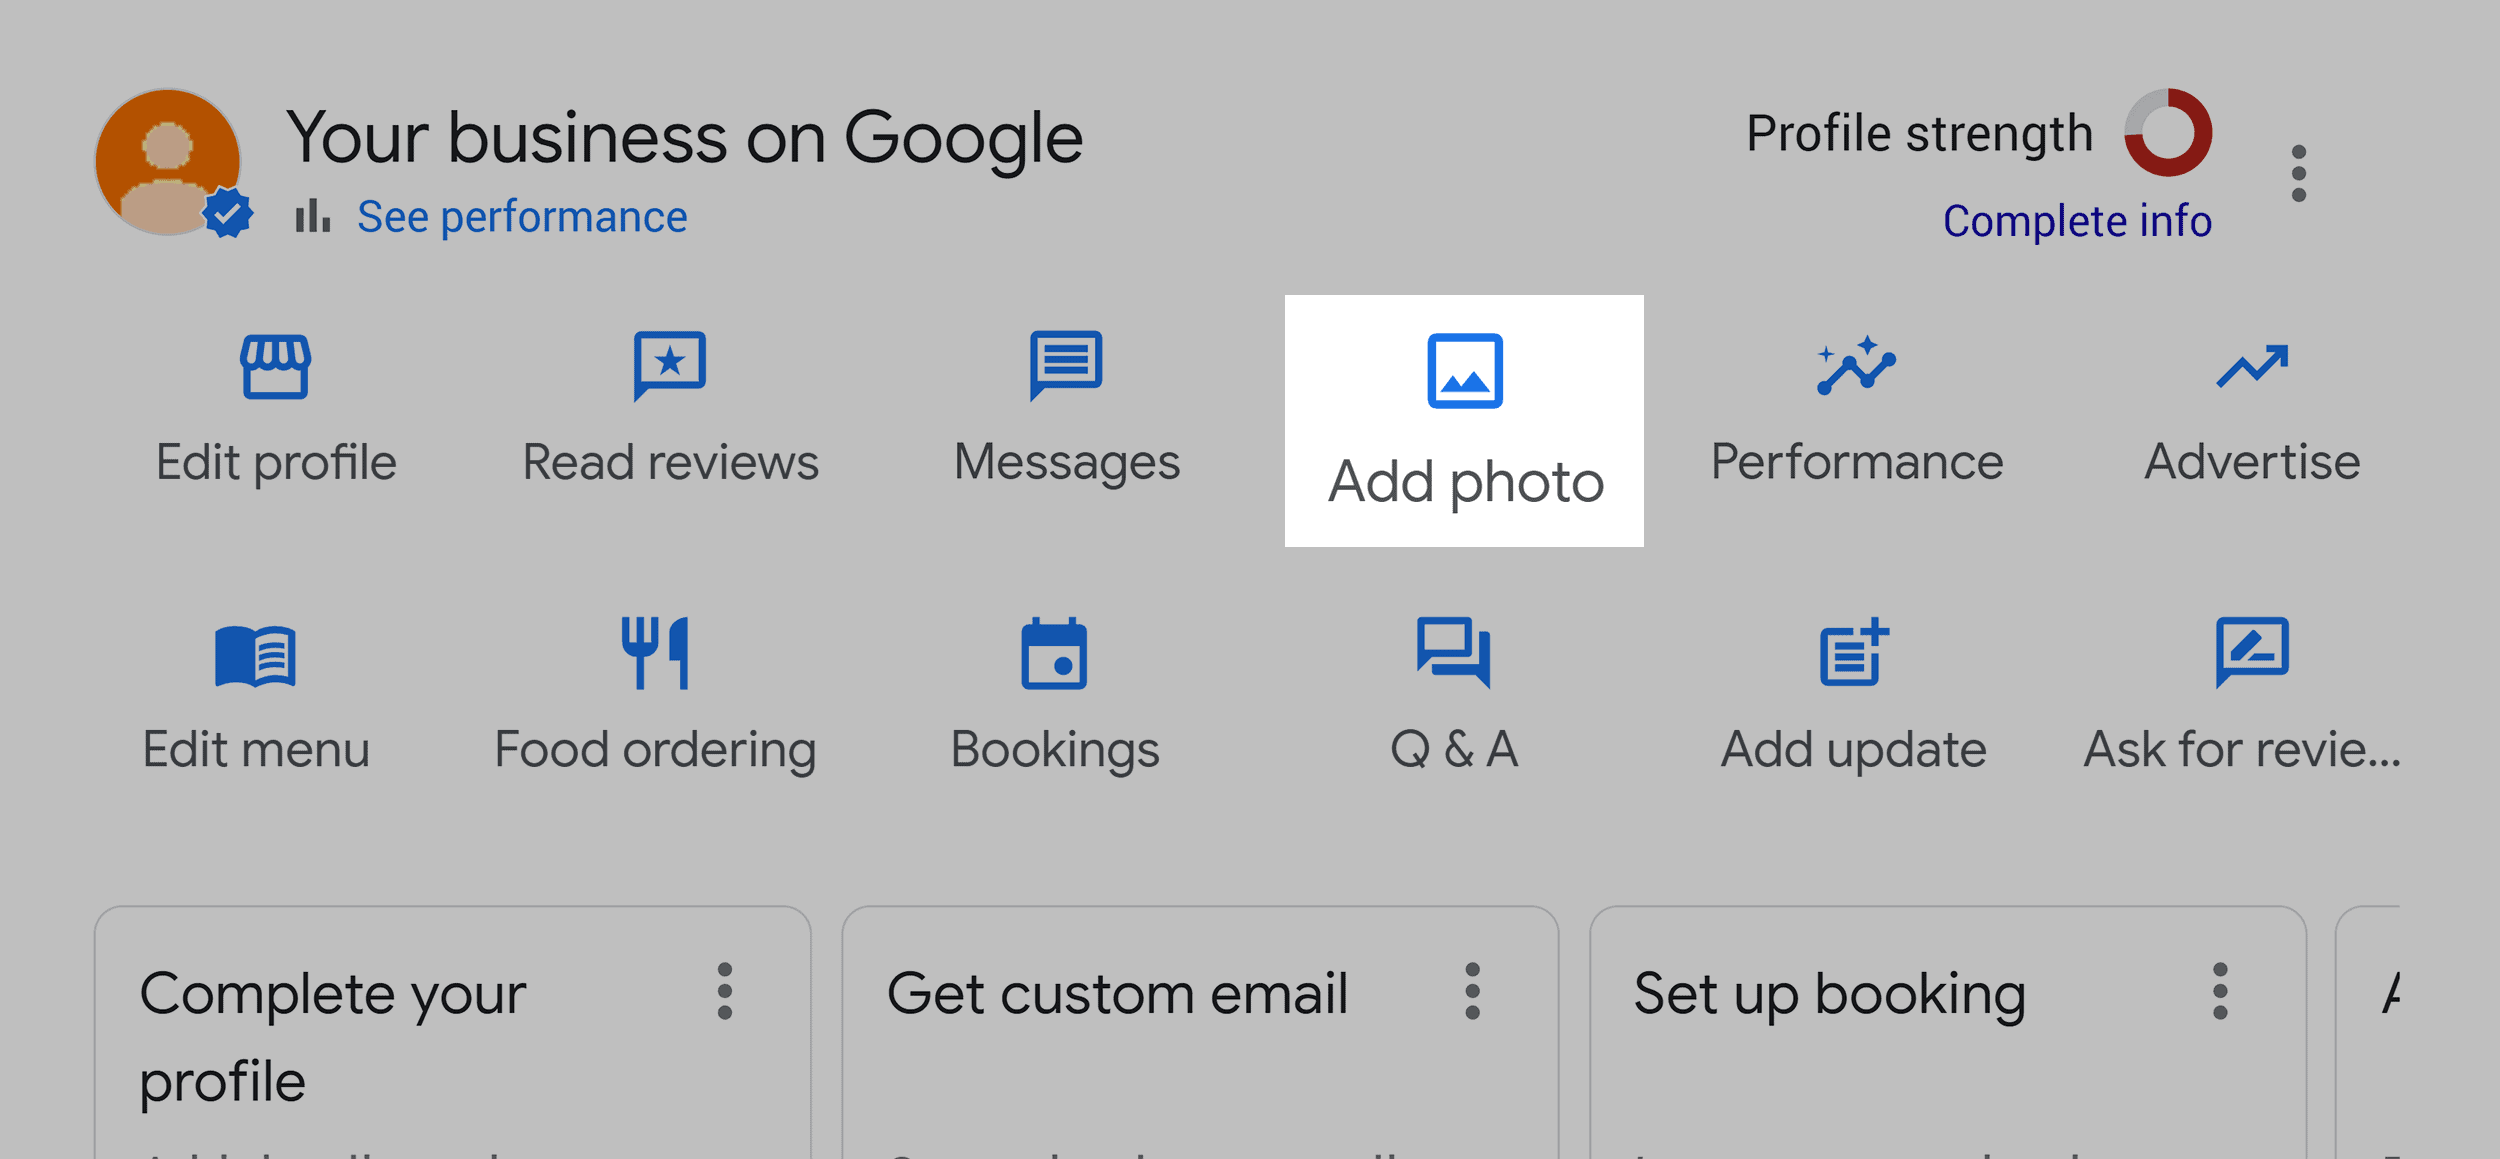 Google Business – Add photo